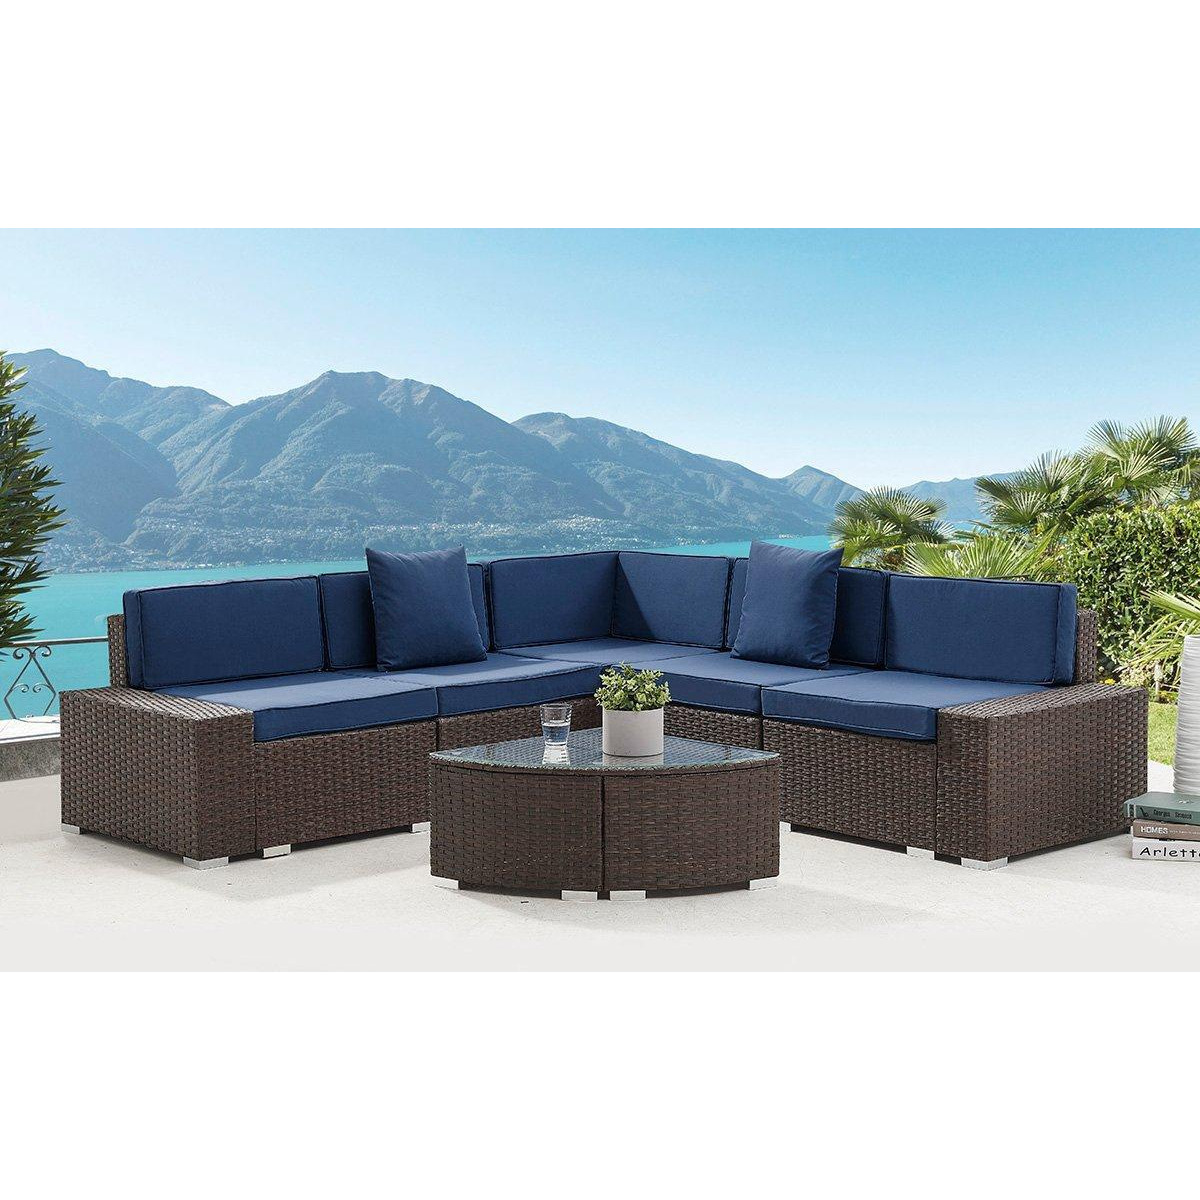 Mijas Corner Corner Rattan Garden Furniture Sofa Set Quarter Circle Glass Topped Table Navy Blue Cushions - image 1